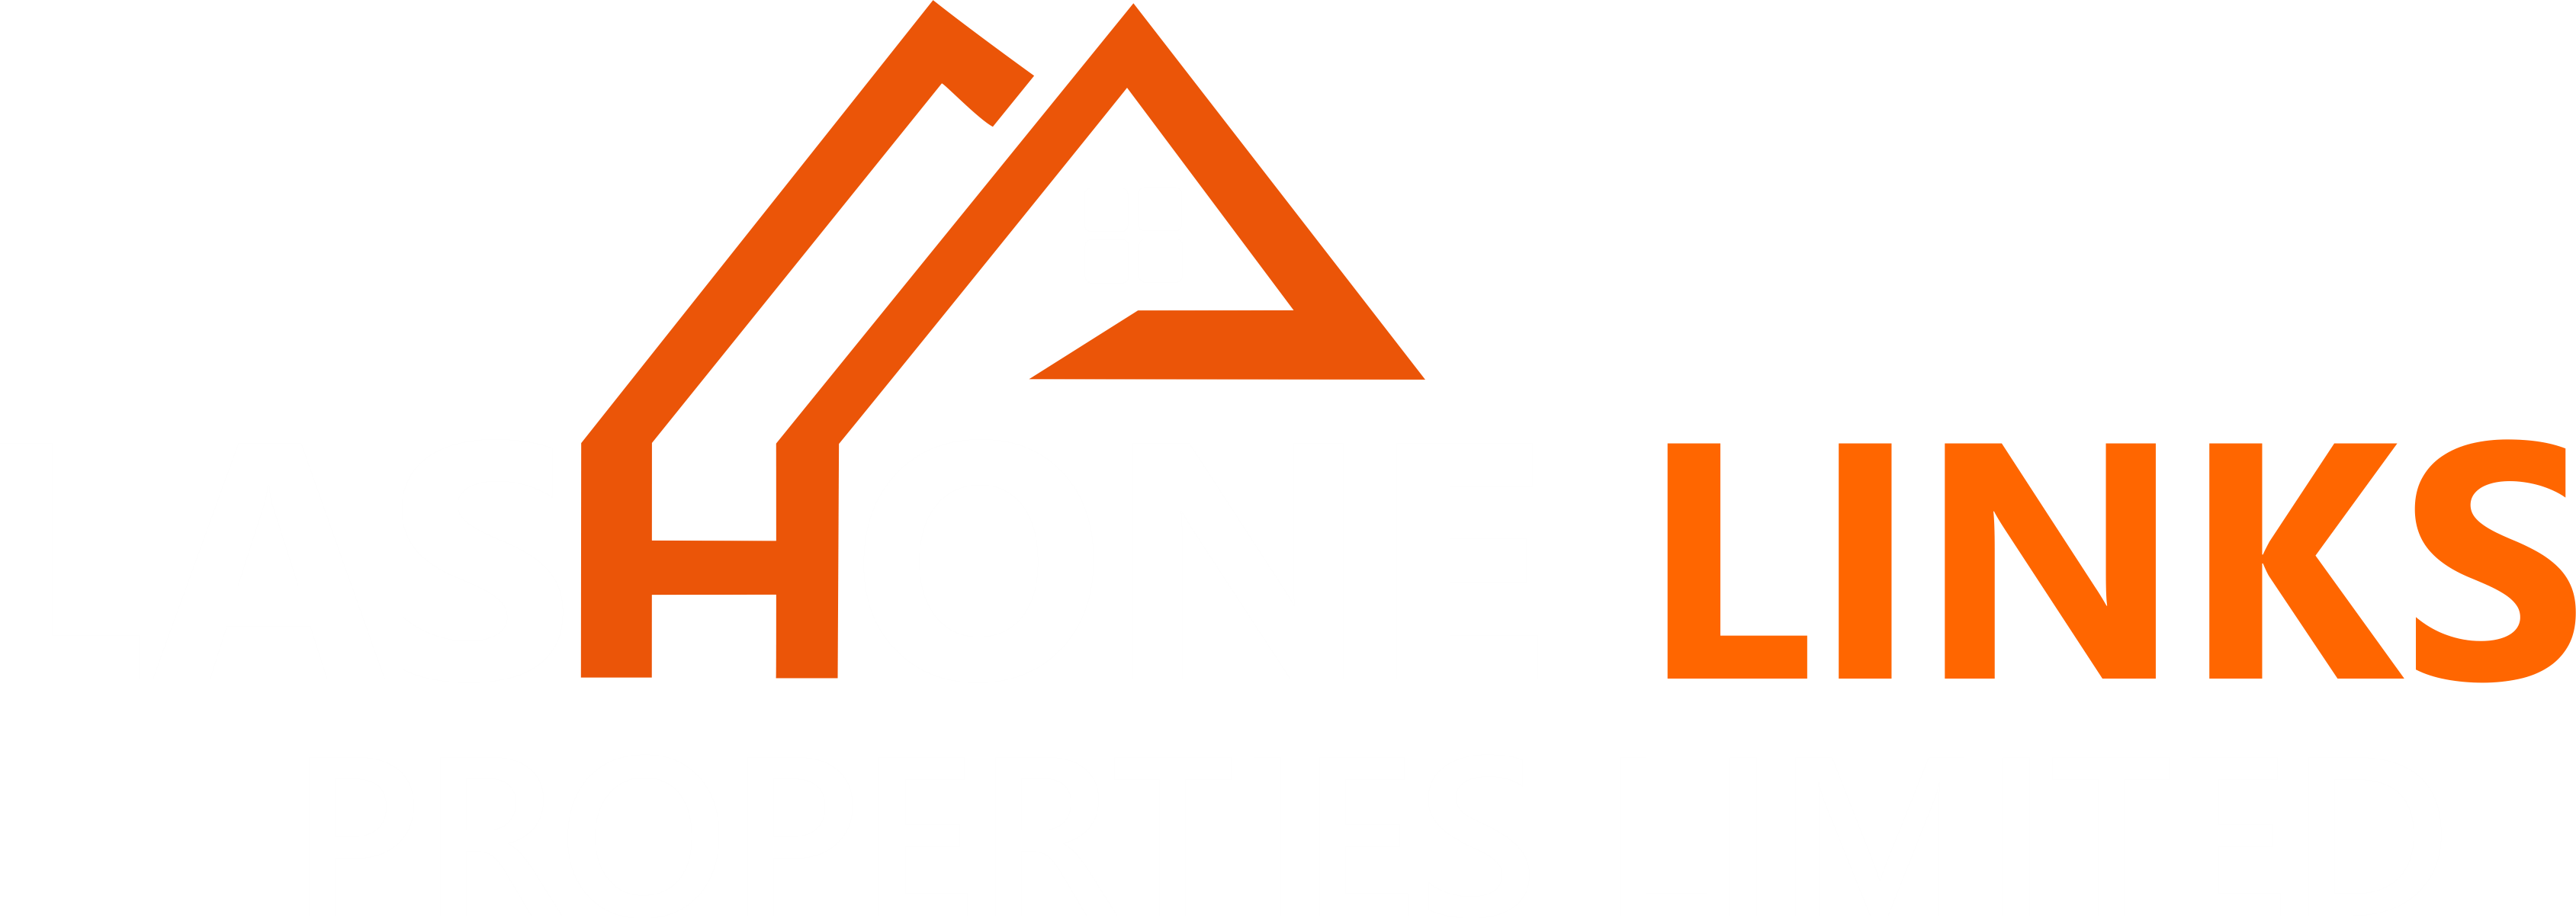 Lashone Property